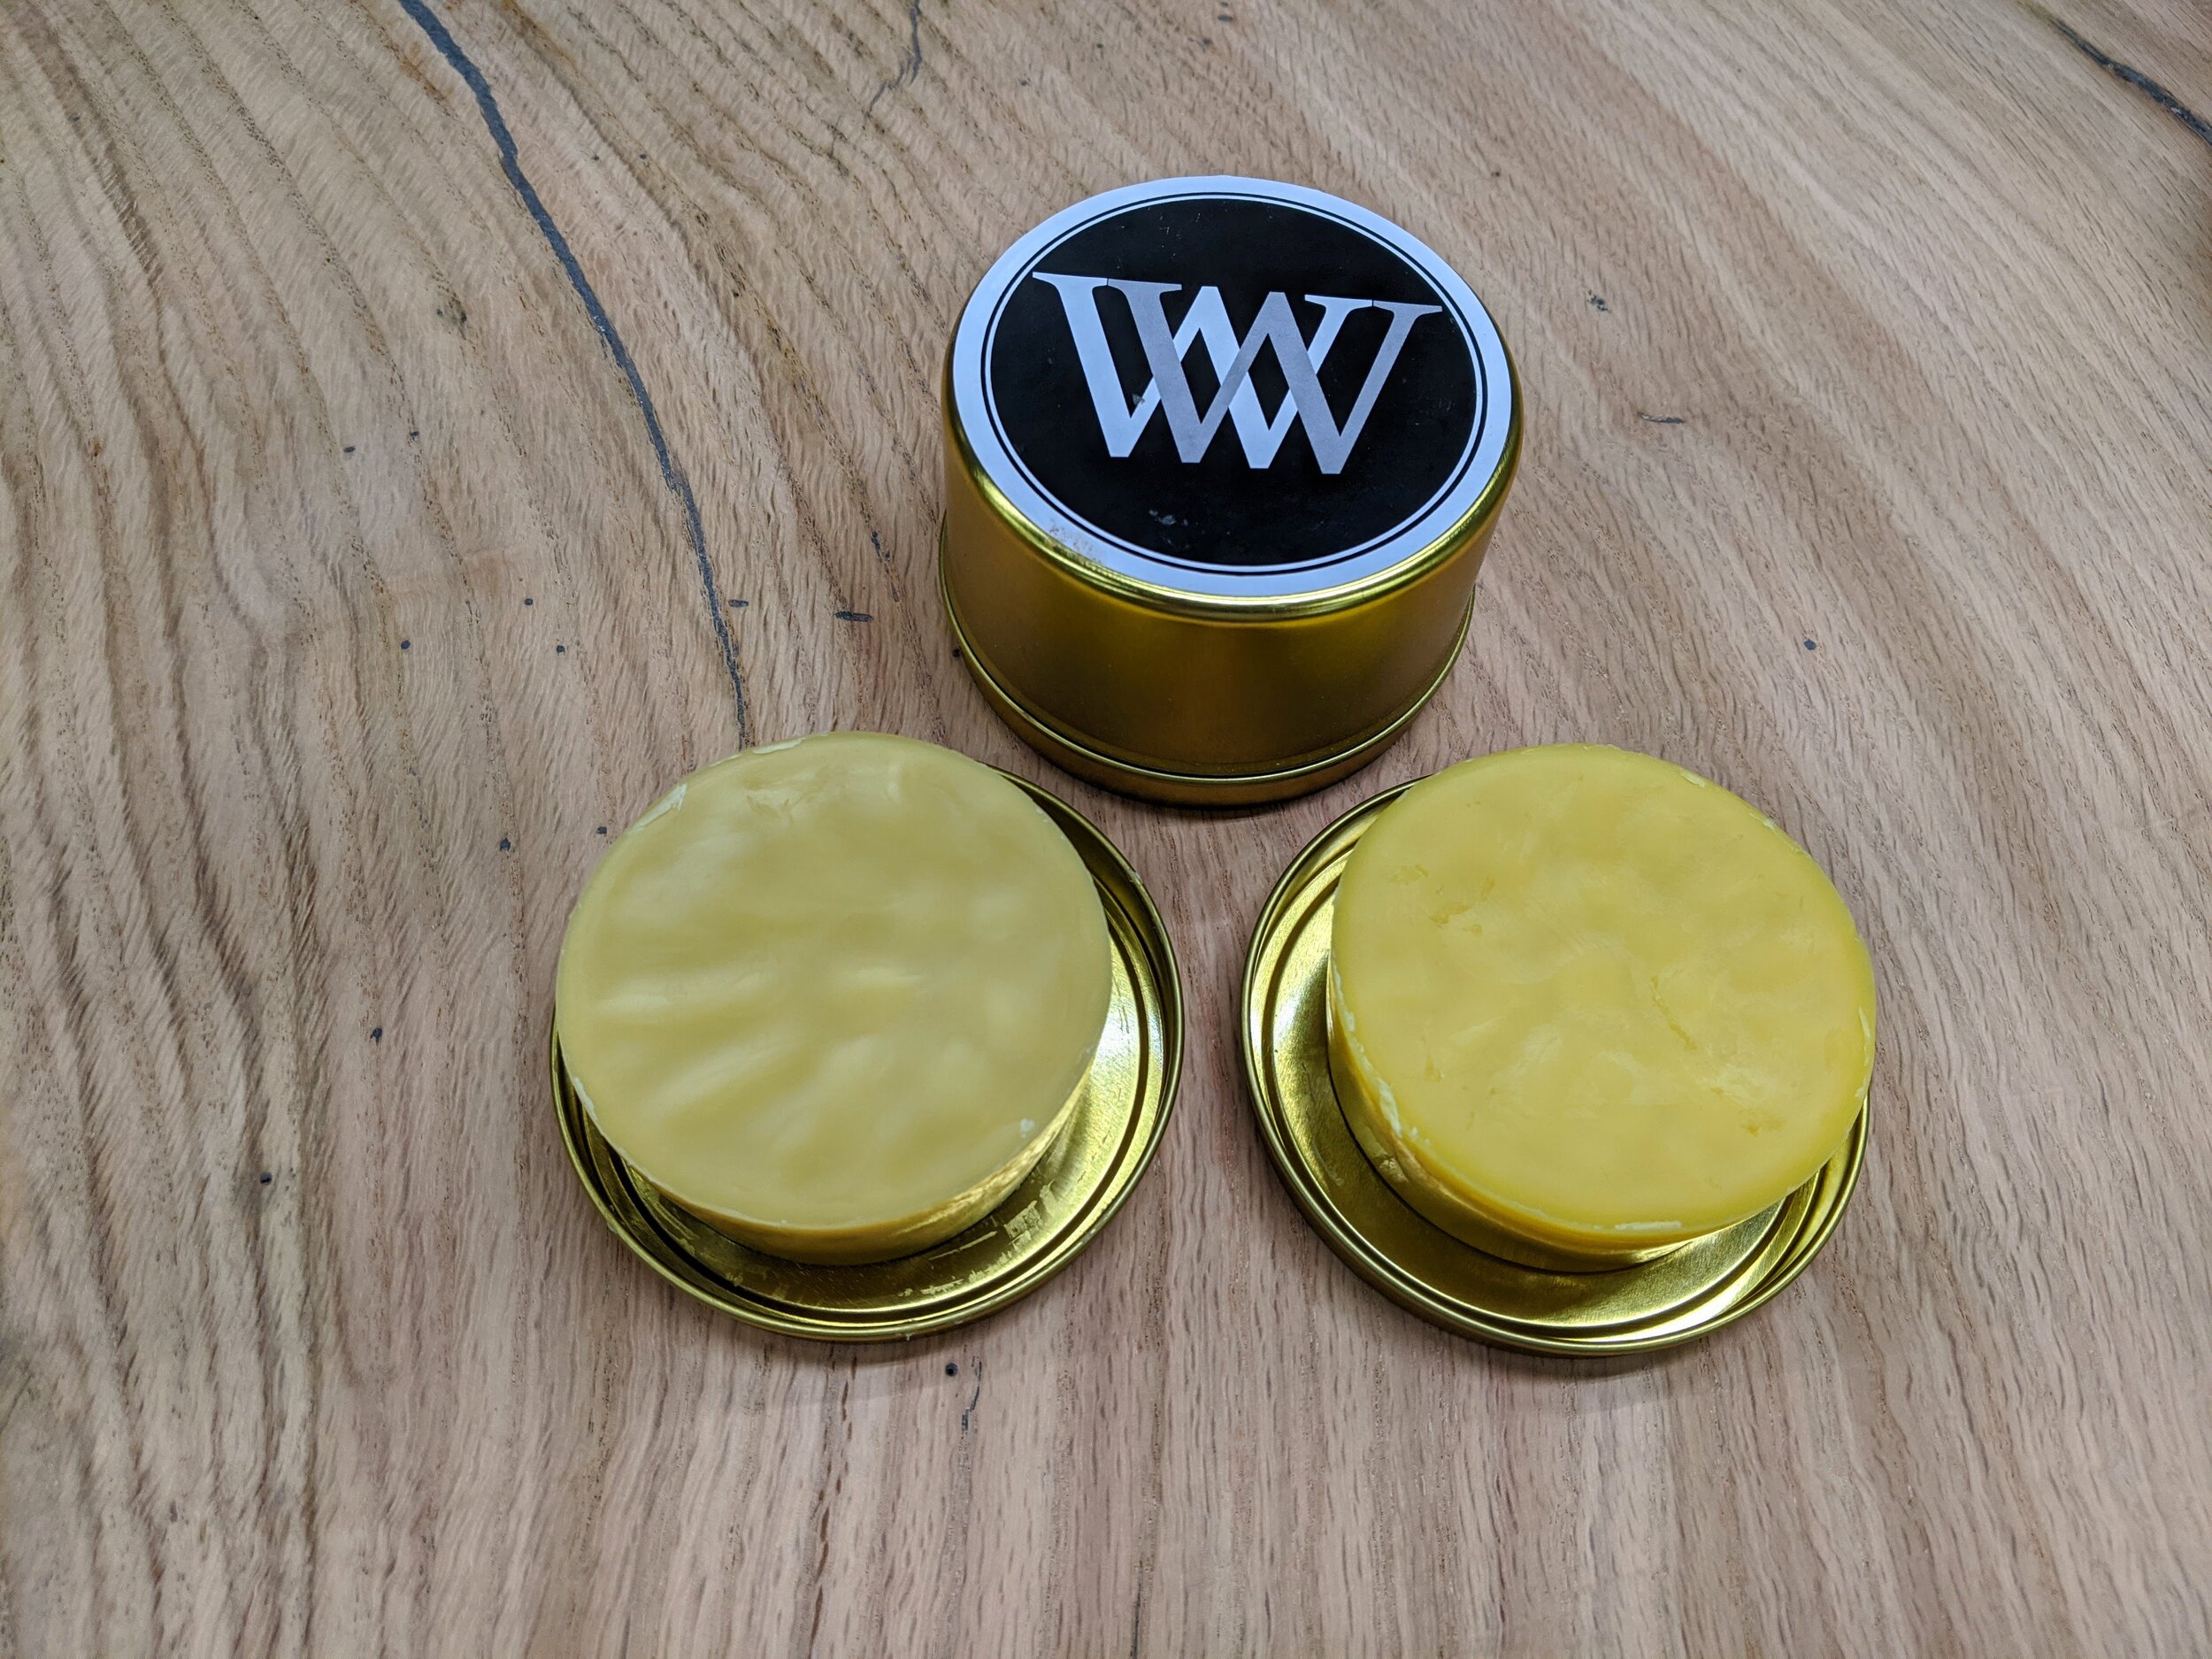 Axe Wax - Hand-made paste wax